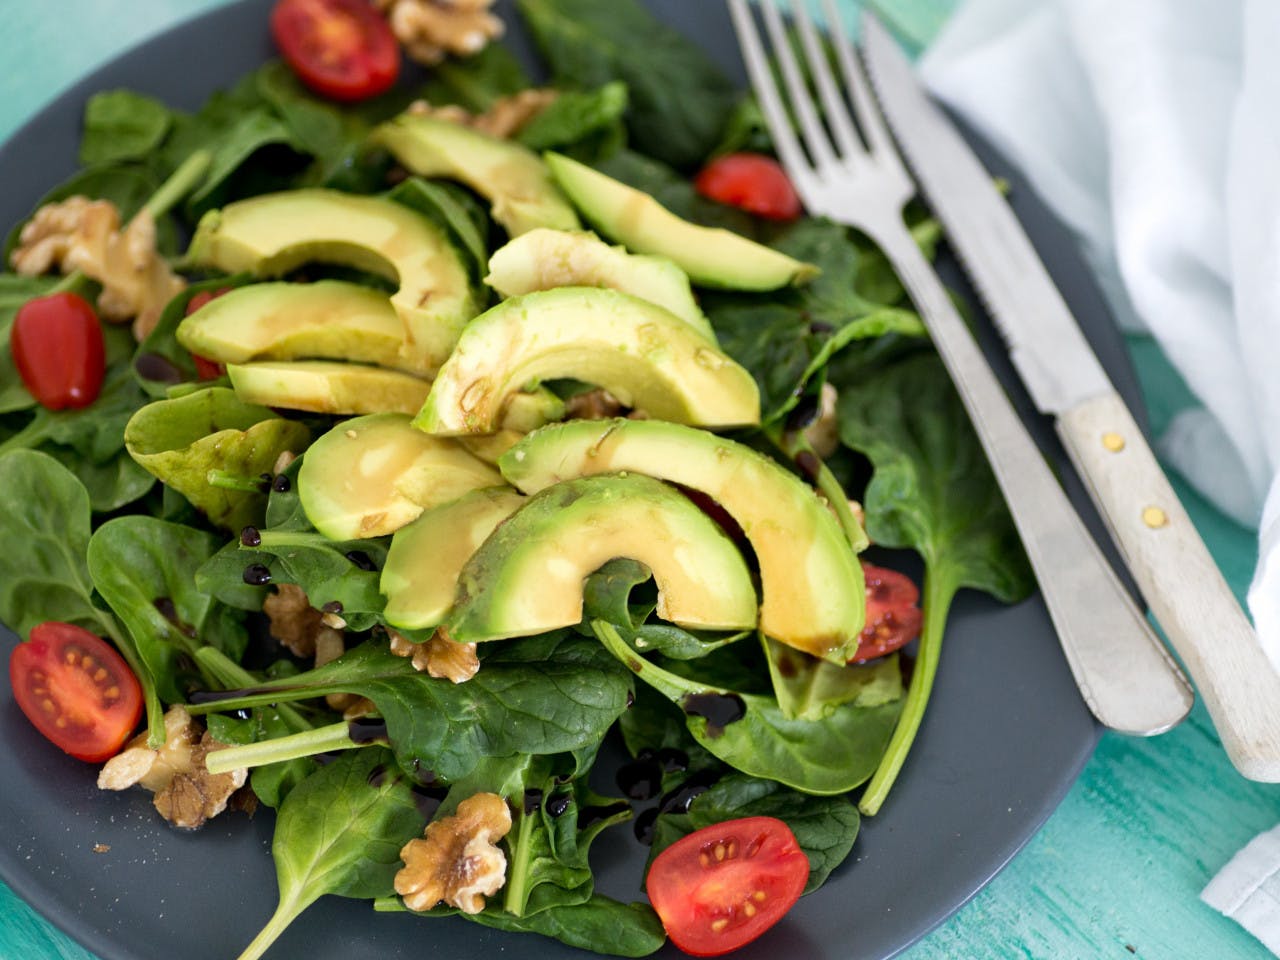 Spinach salad with avocado